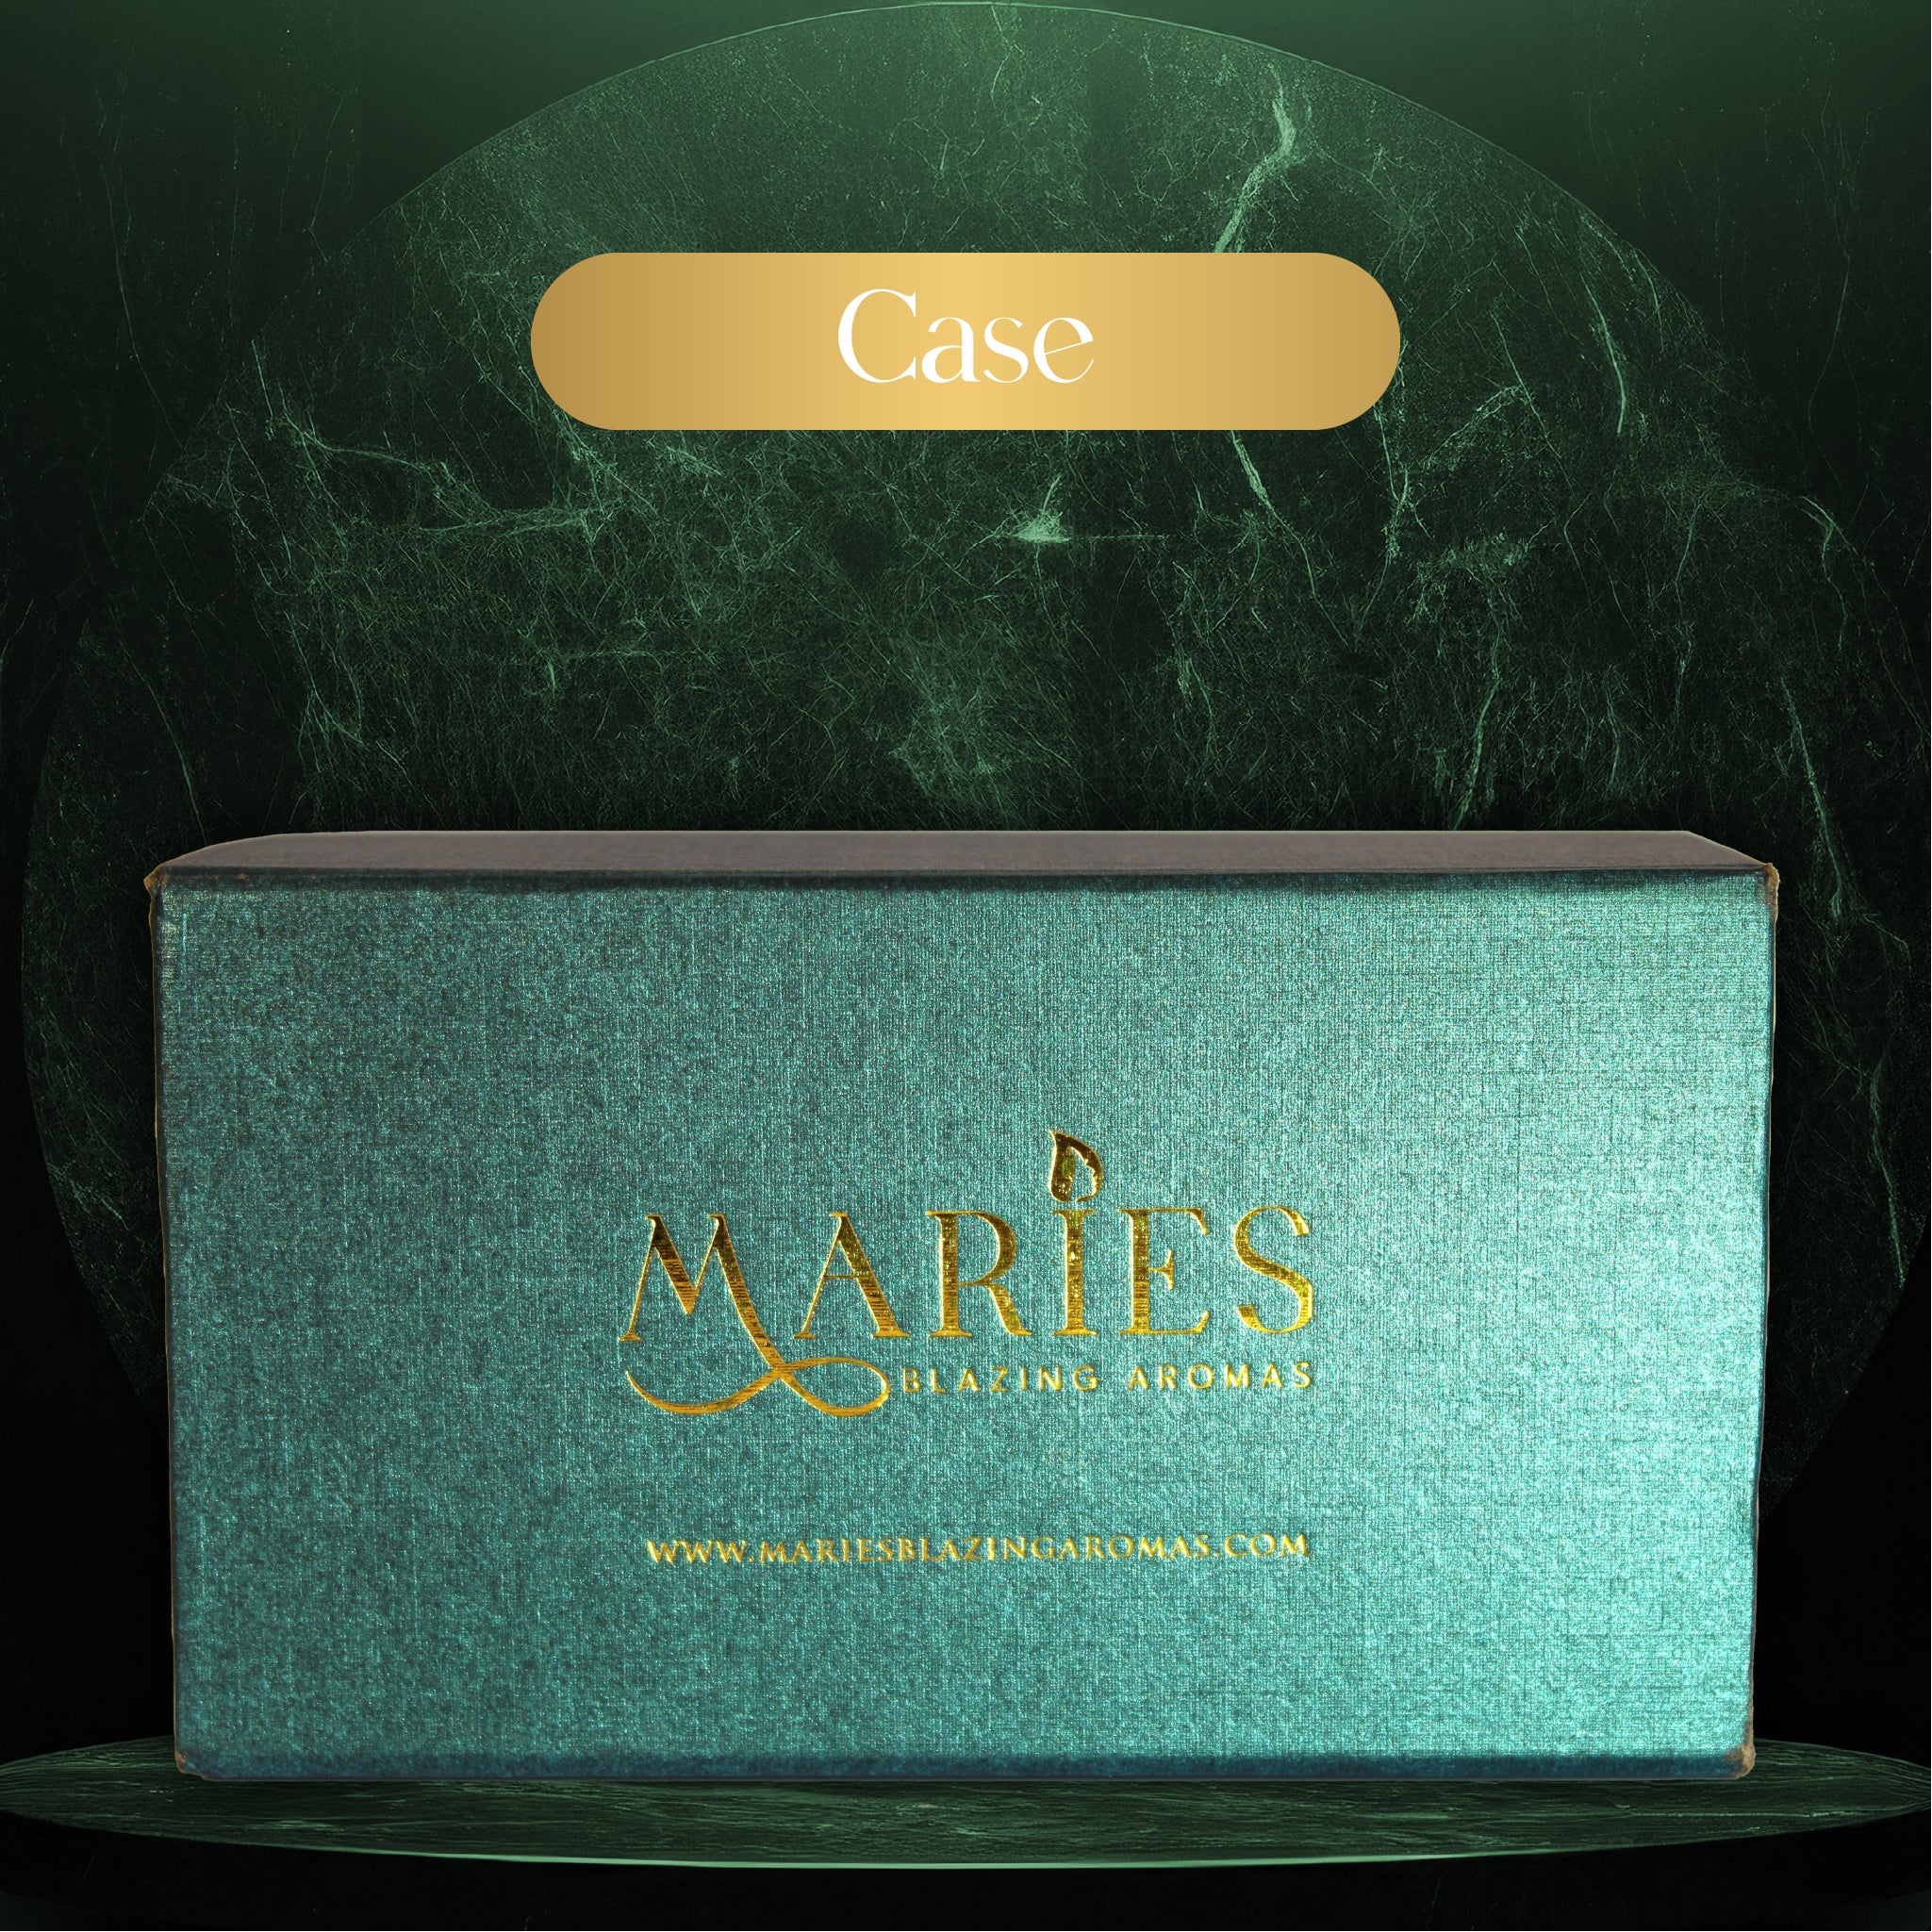 Elevate your senses with Worthy Luxury Perfume Fragrance Oil - Maries Blazing Aromas